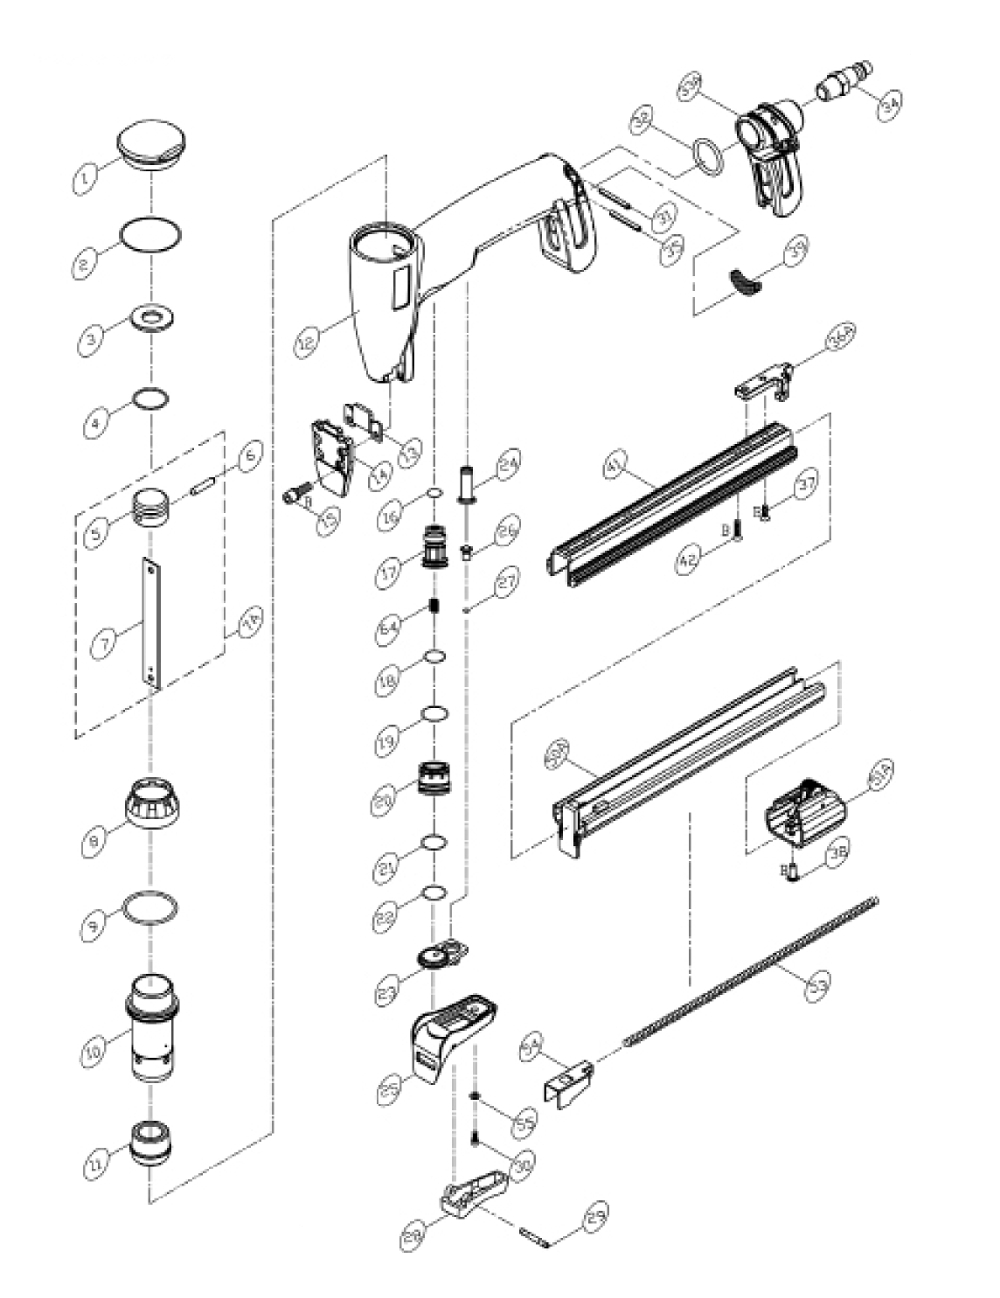 Stapler JK10-680 Spare parts